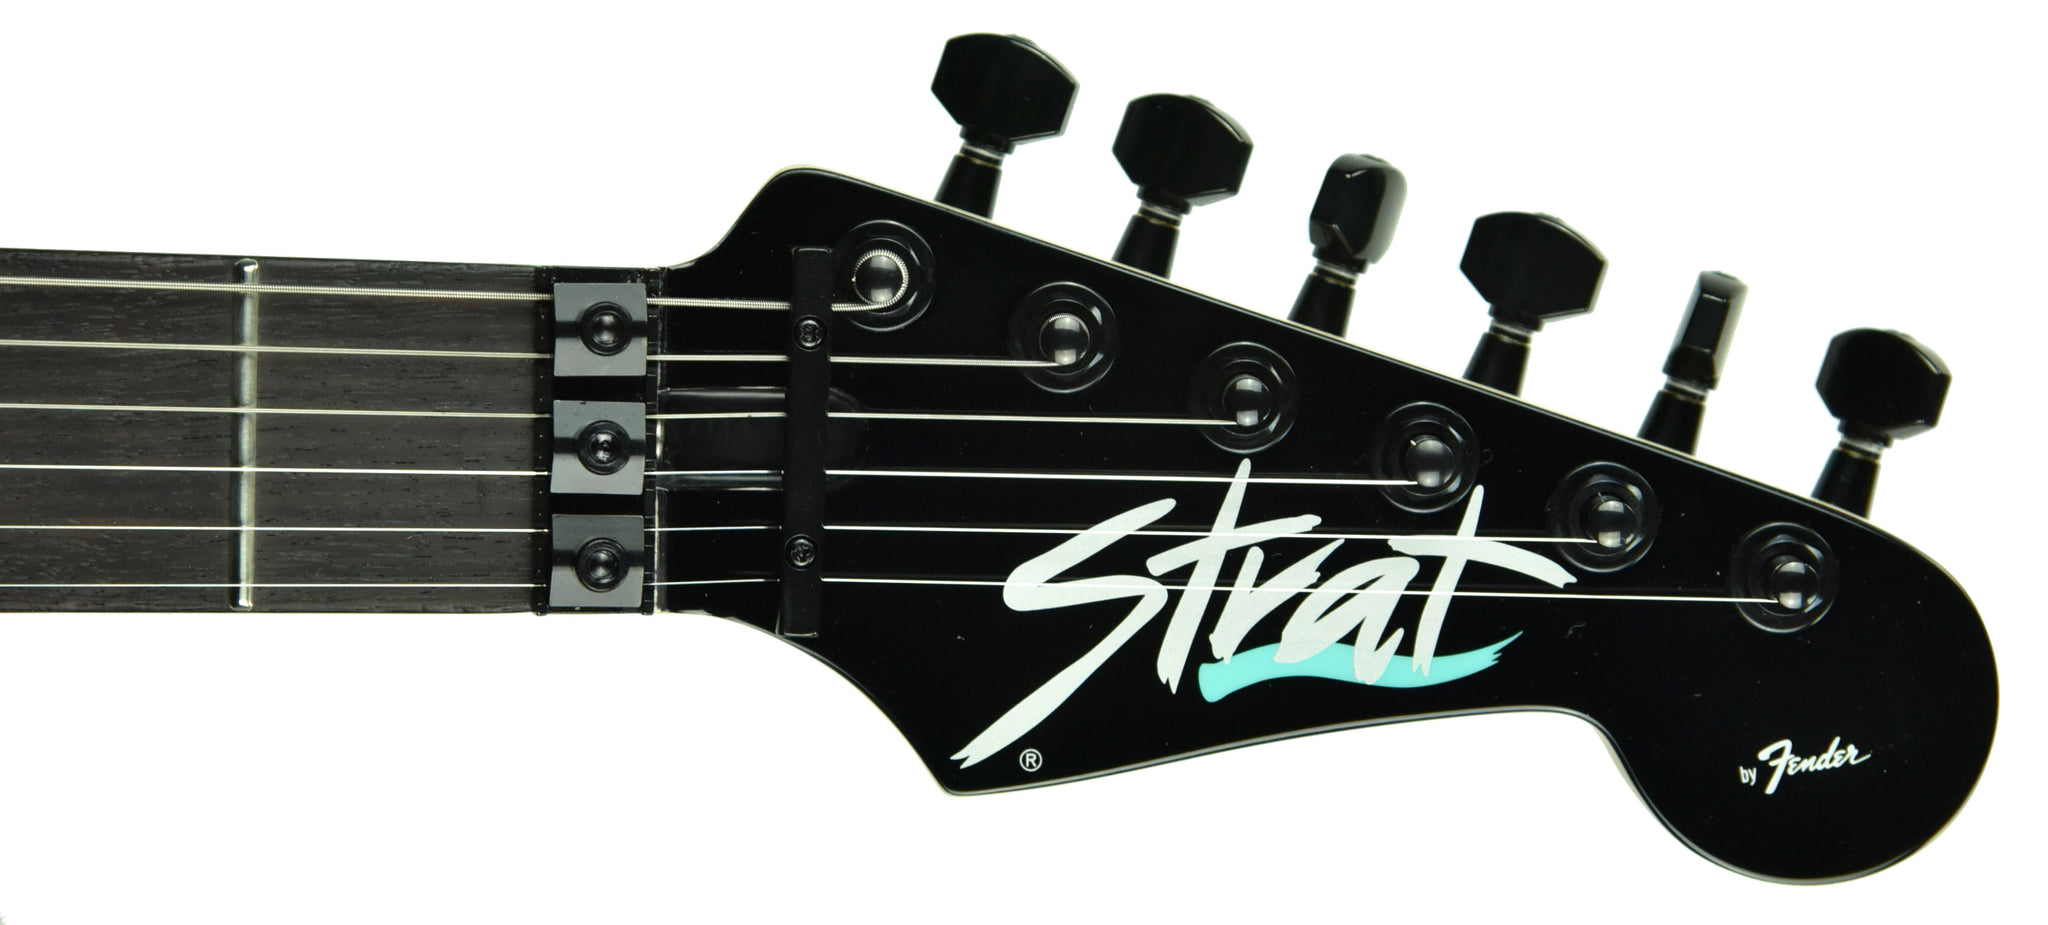 Fender Limited Edition HM Strat in Ice Blue w/Gig Bag JFFC20000398